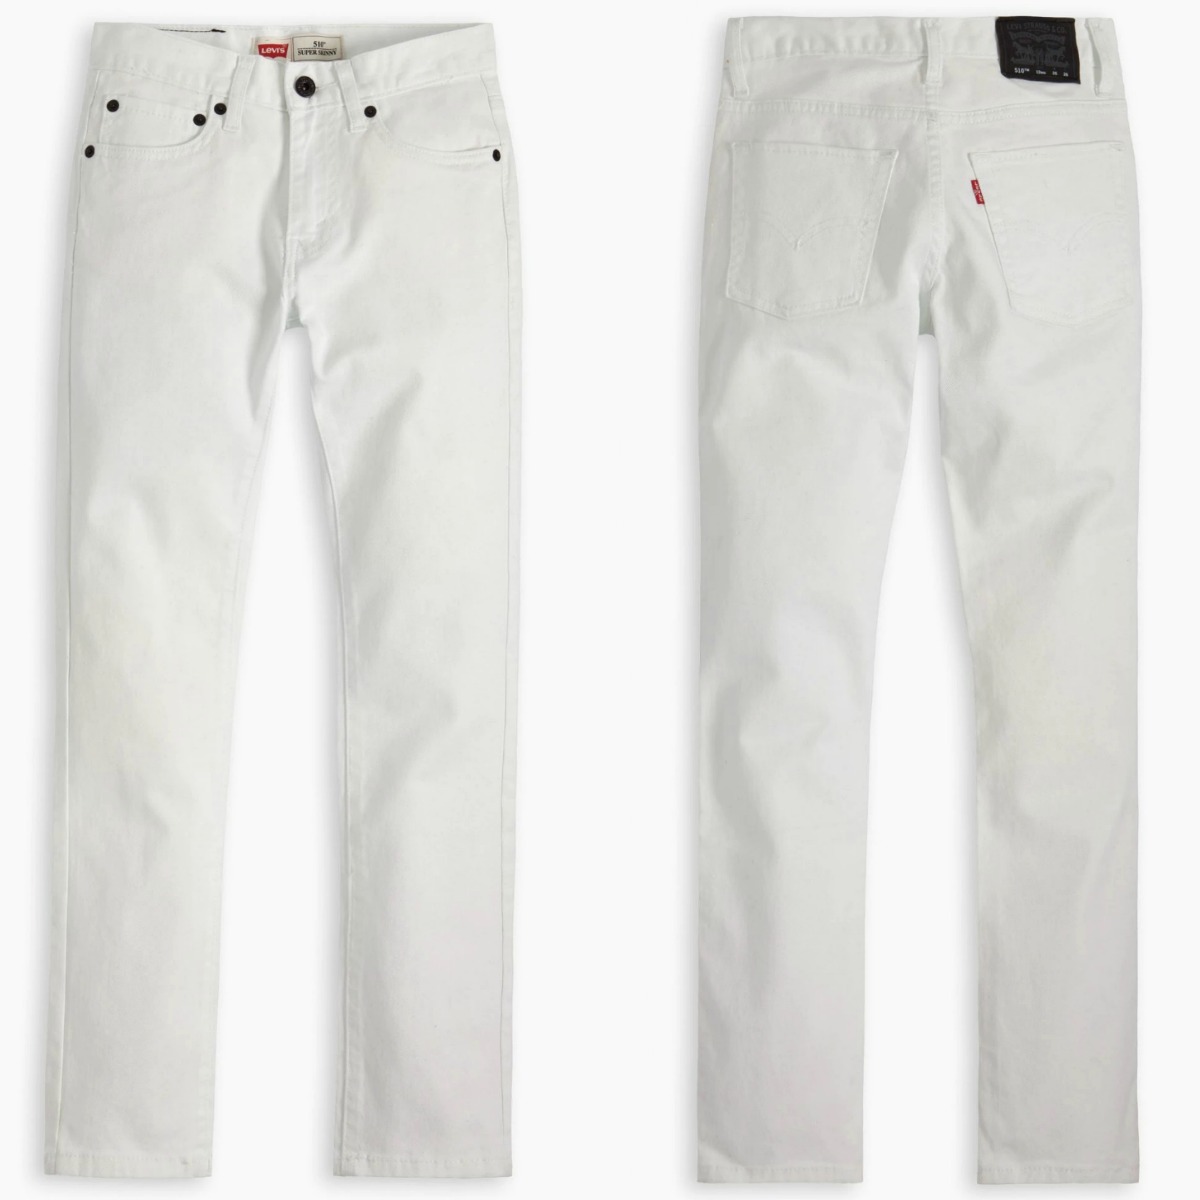 levi 505 white jeans